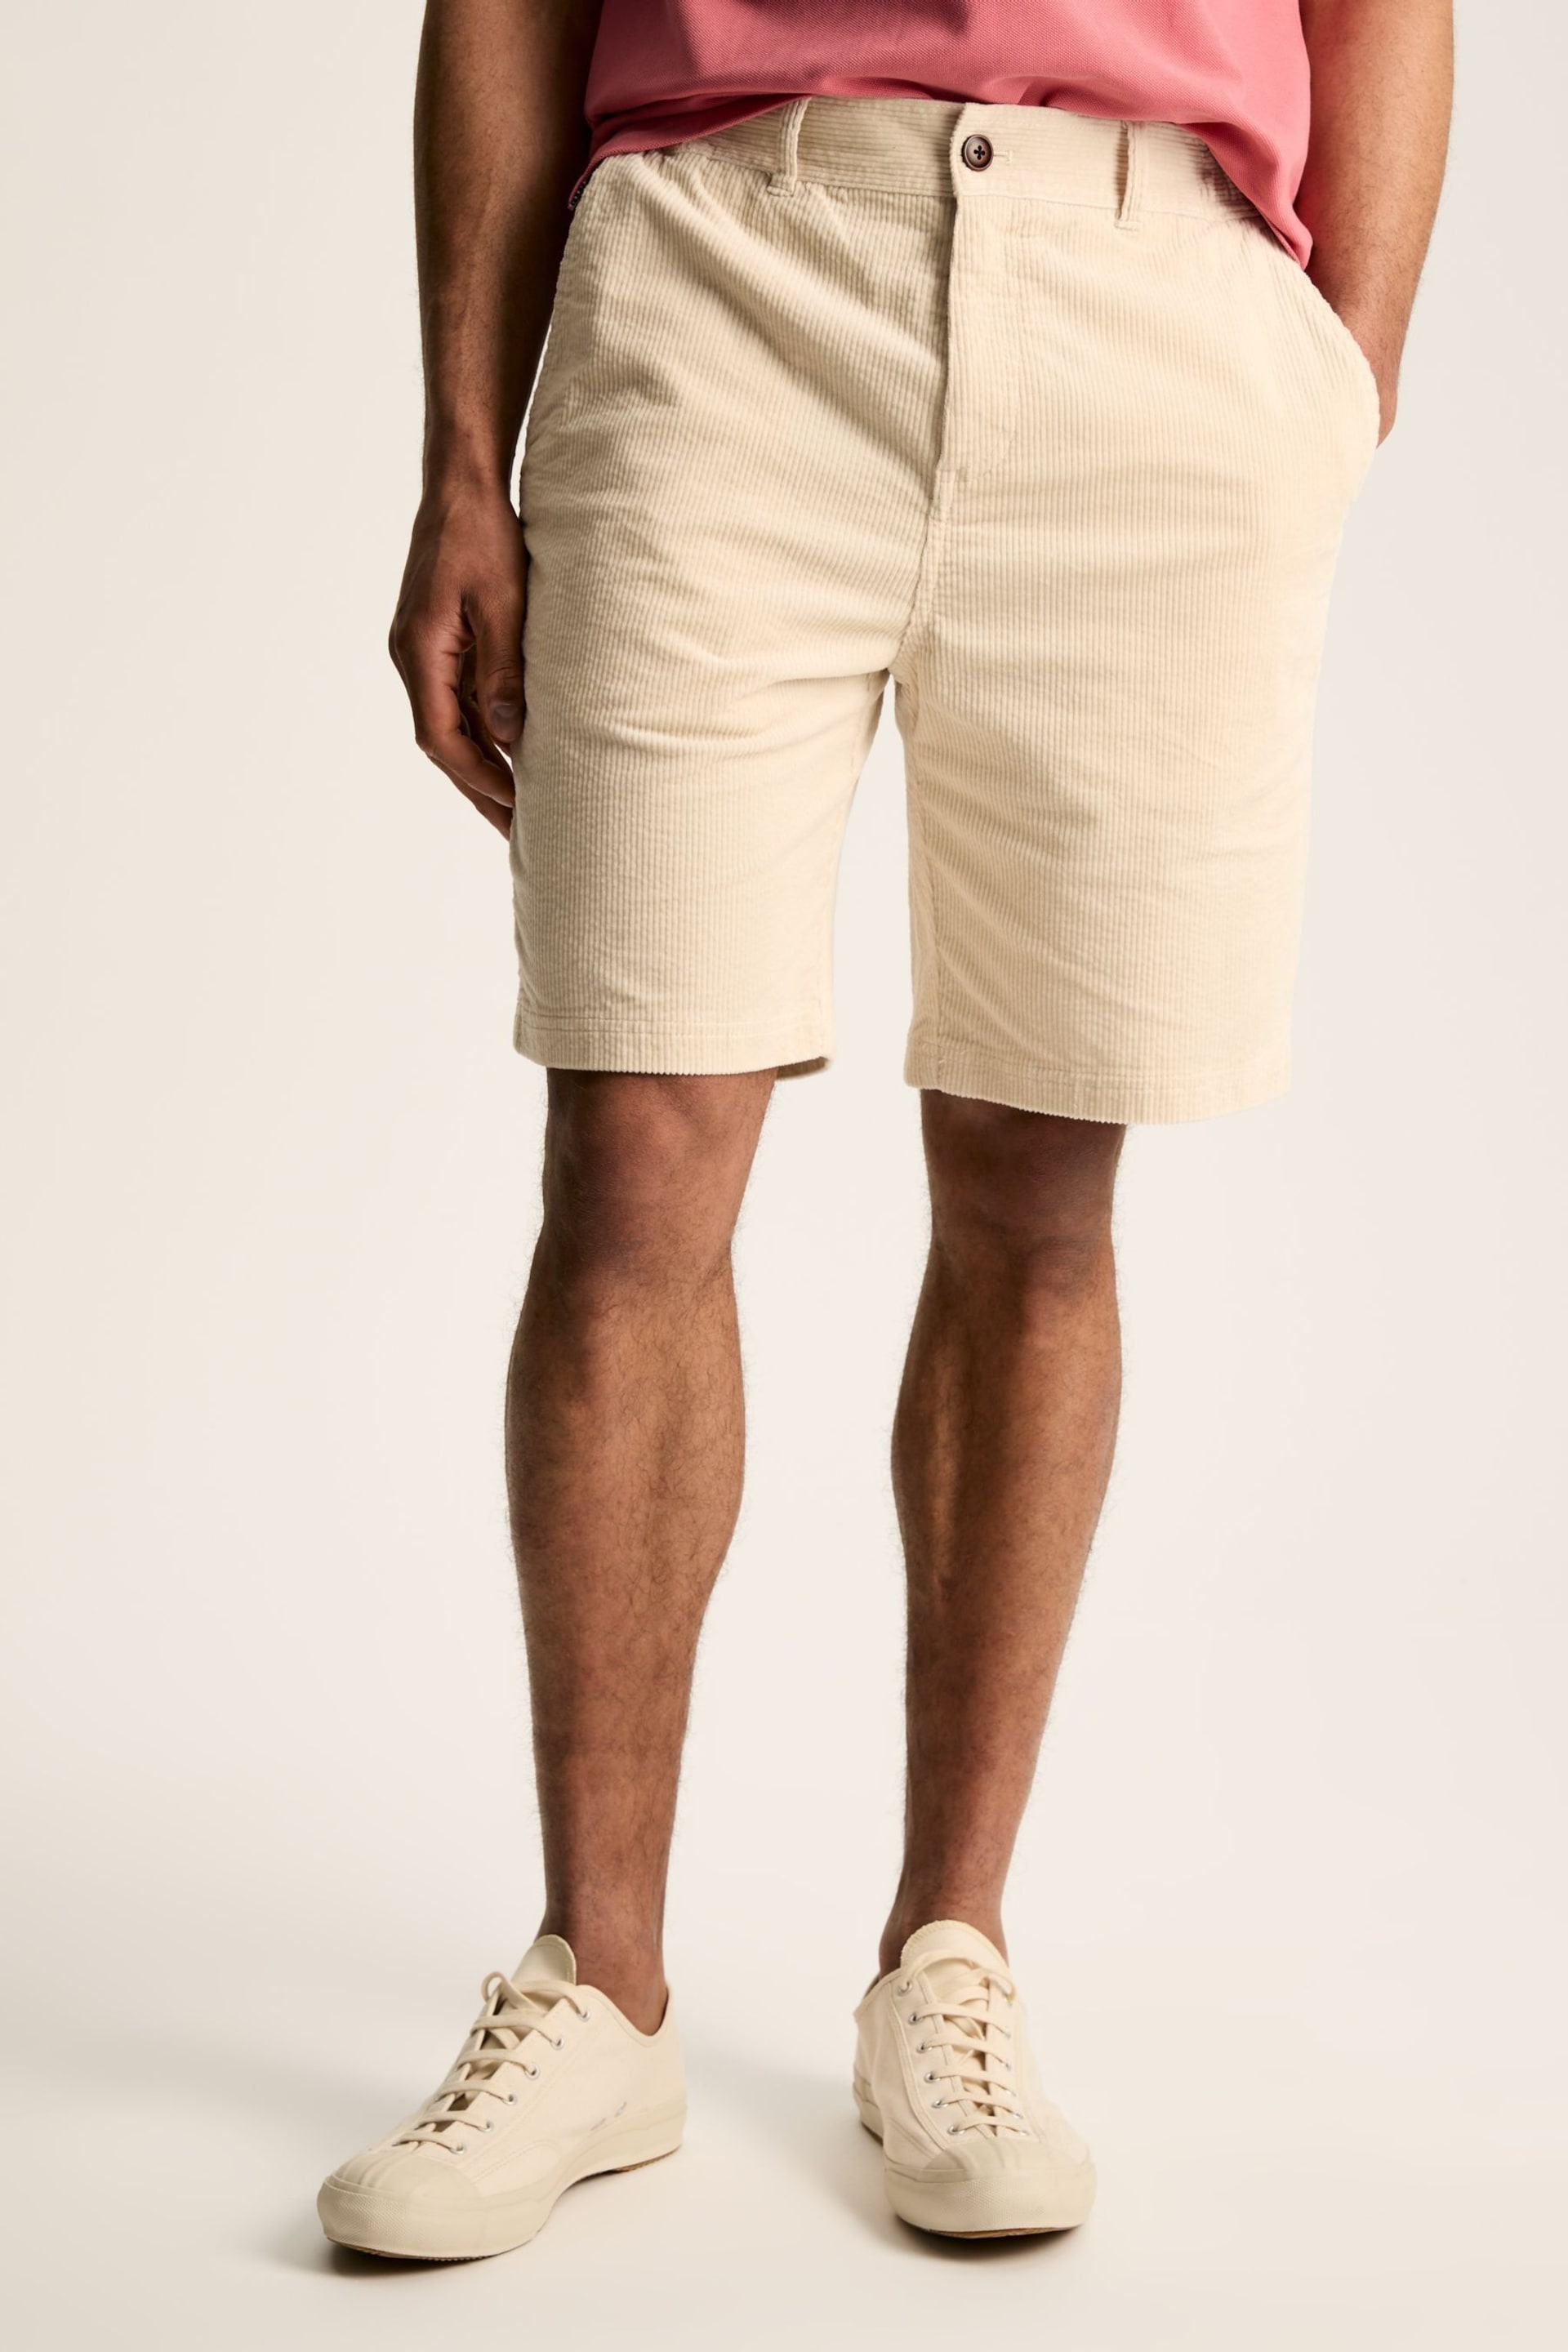 Joules Cream Corduroy Elasticated Waist Shorts - Image 1 of 6